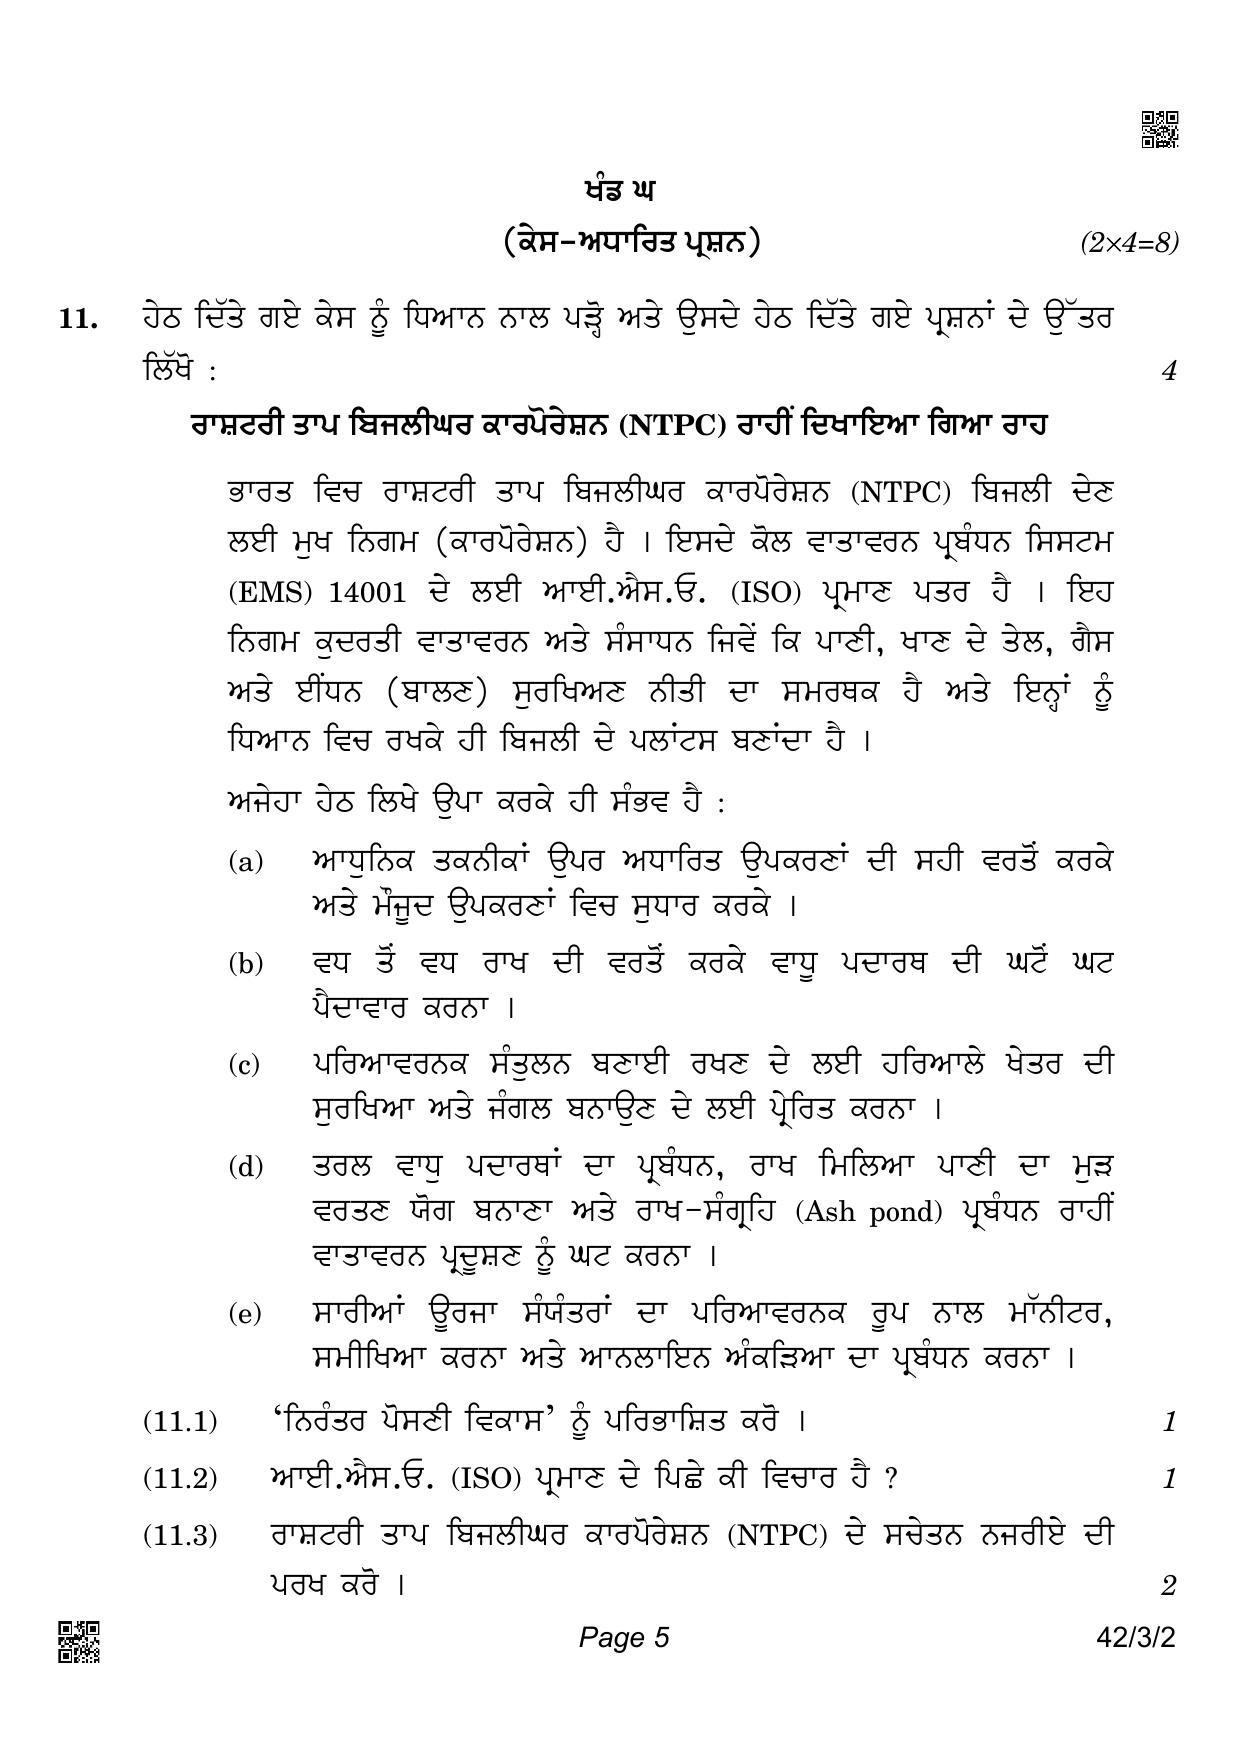 CBSE Class 10 42-3-2 Social Science Punjabi Version 2022 Question Paper - Page 5